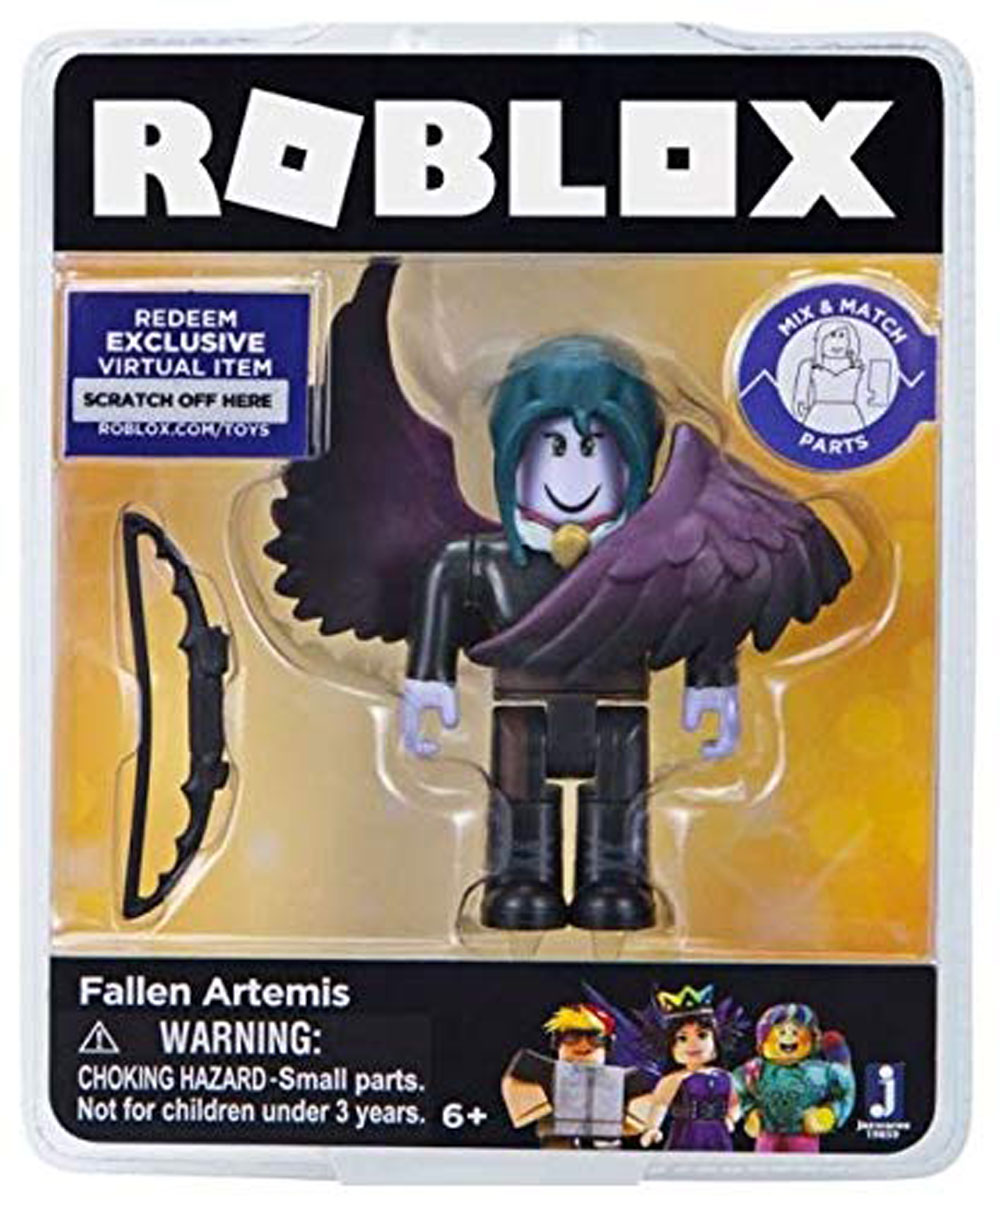 Roblox Celebrity Core Fallen Artemis Toys R Us Canada - roblox celebrity fallen artemis products doll toys